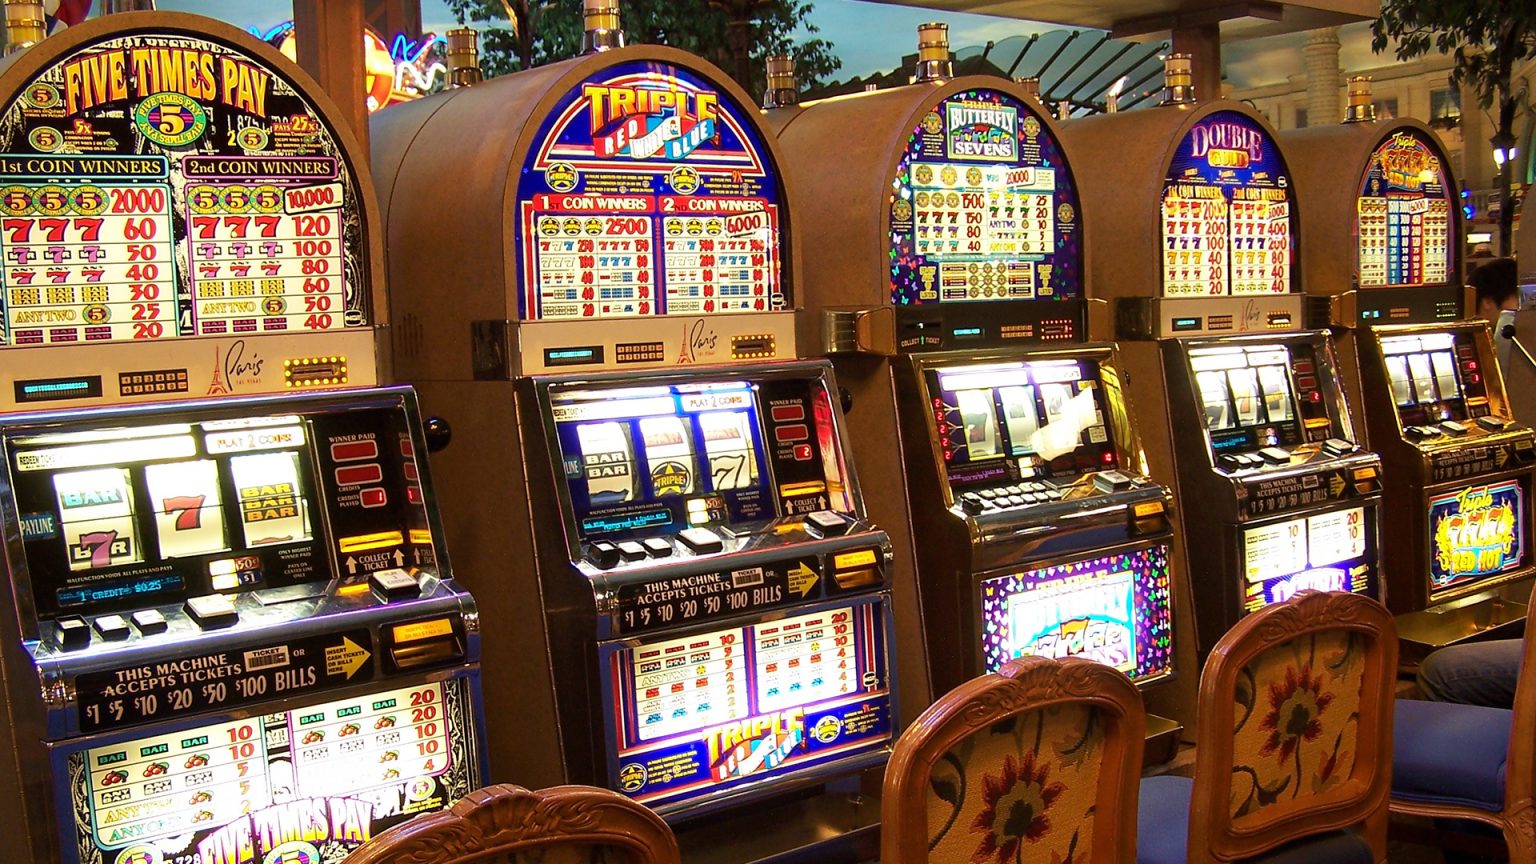 casinos with slot machines